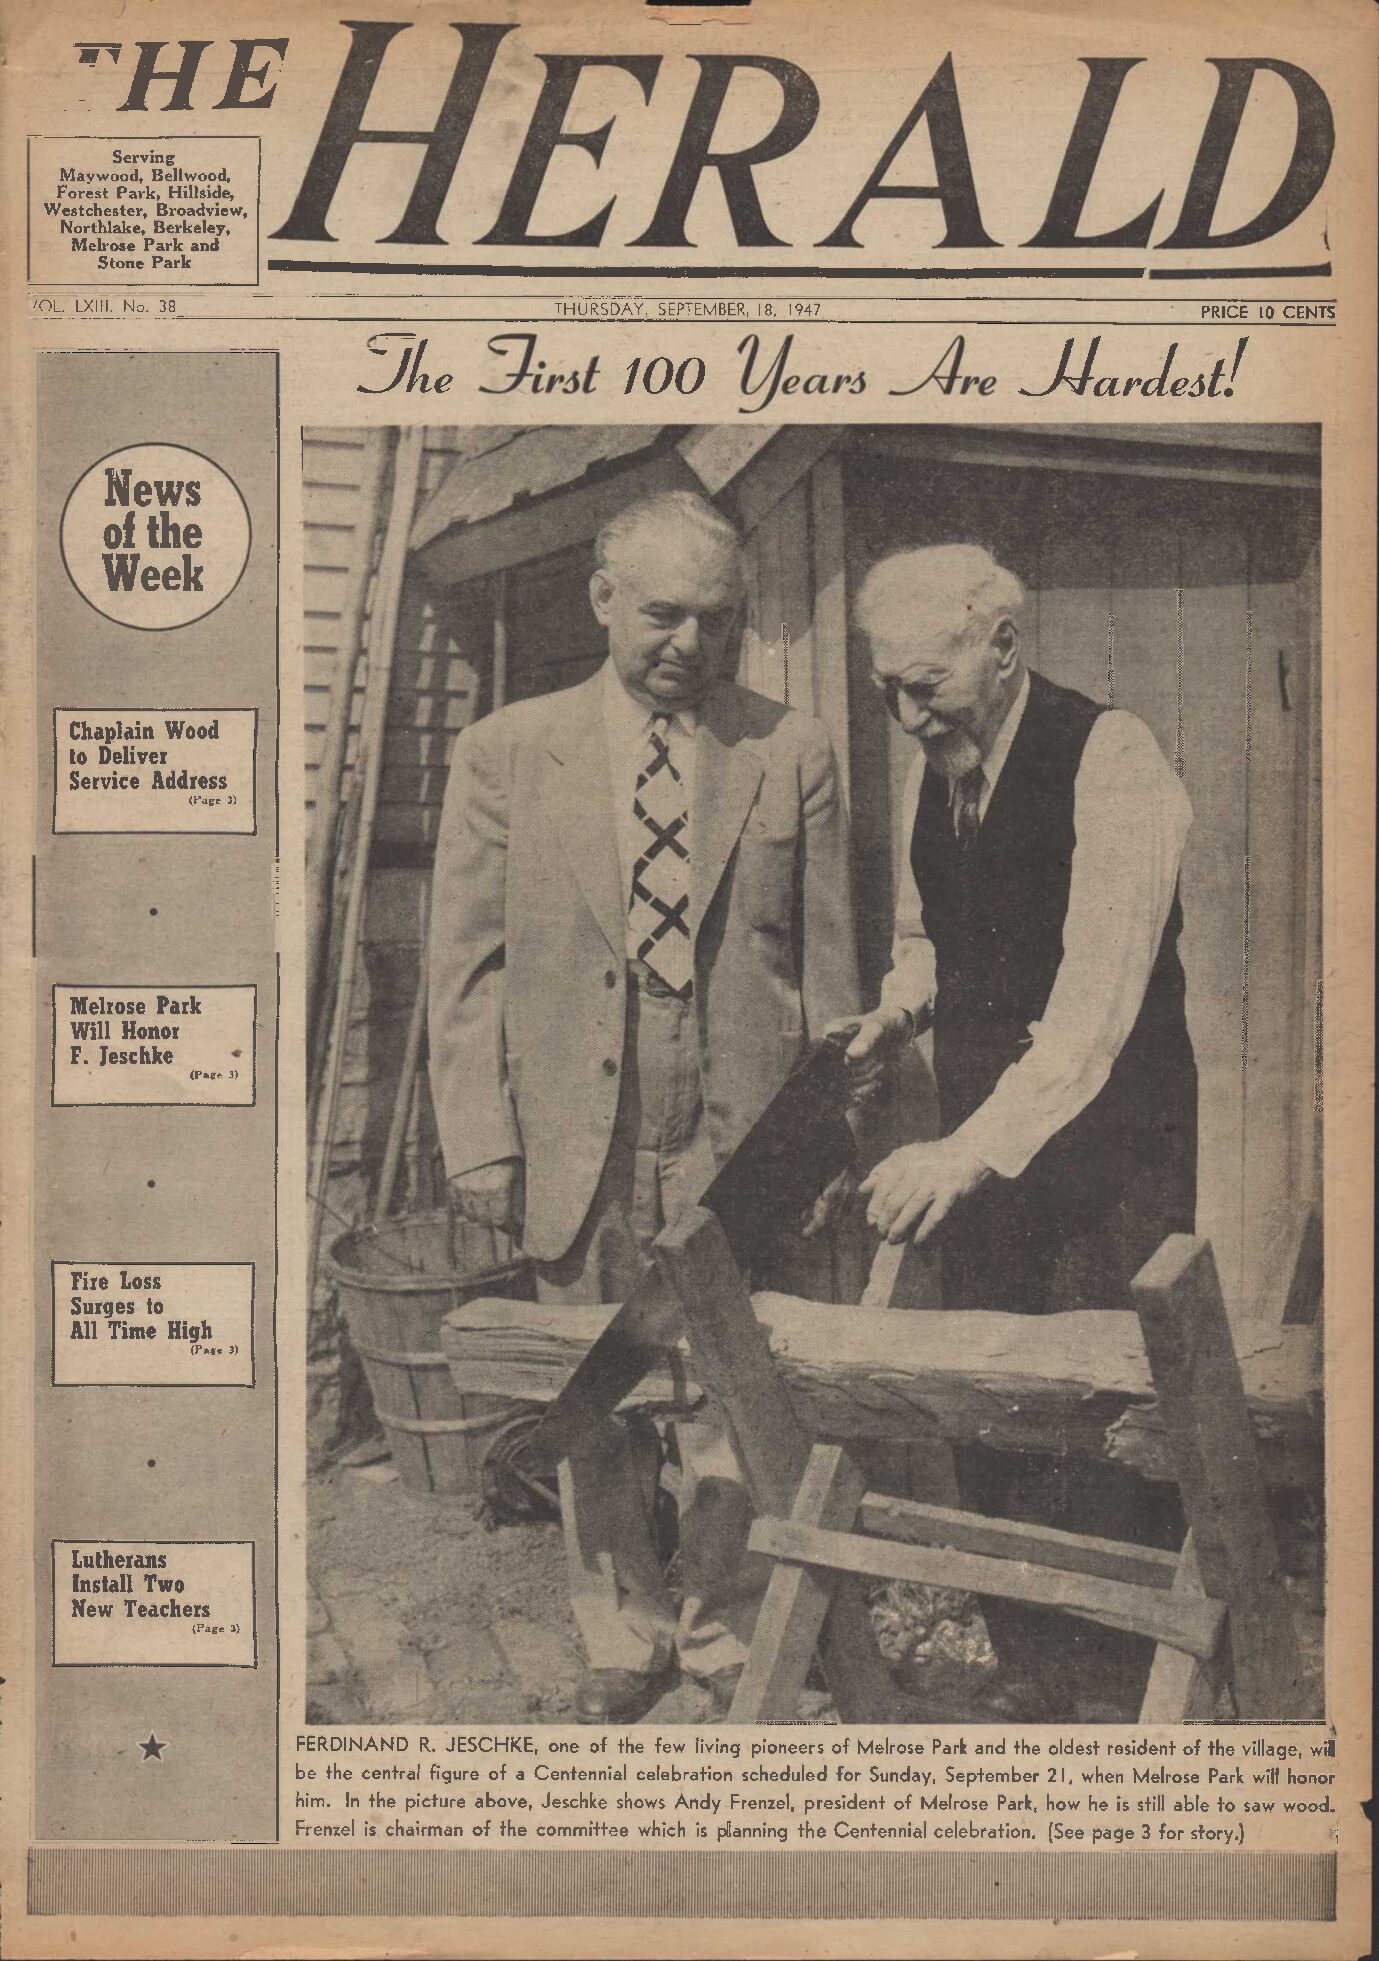 The Herald – 19470918